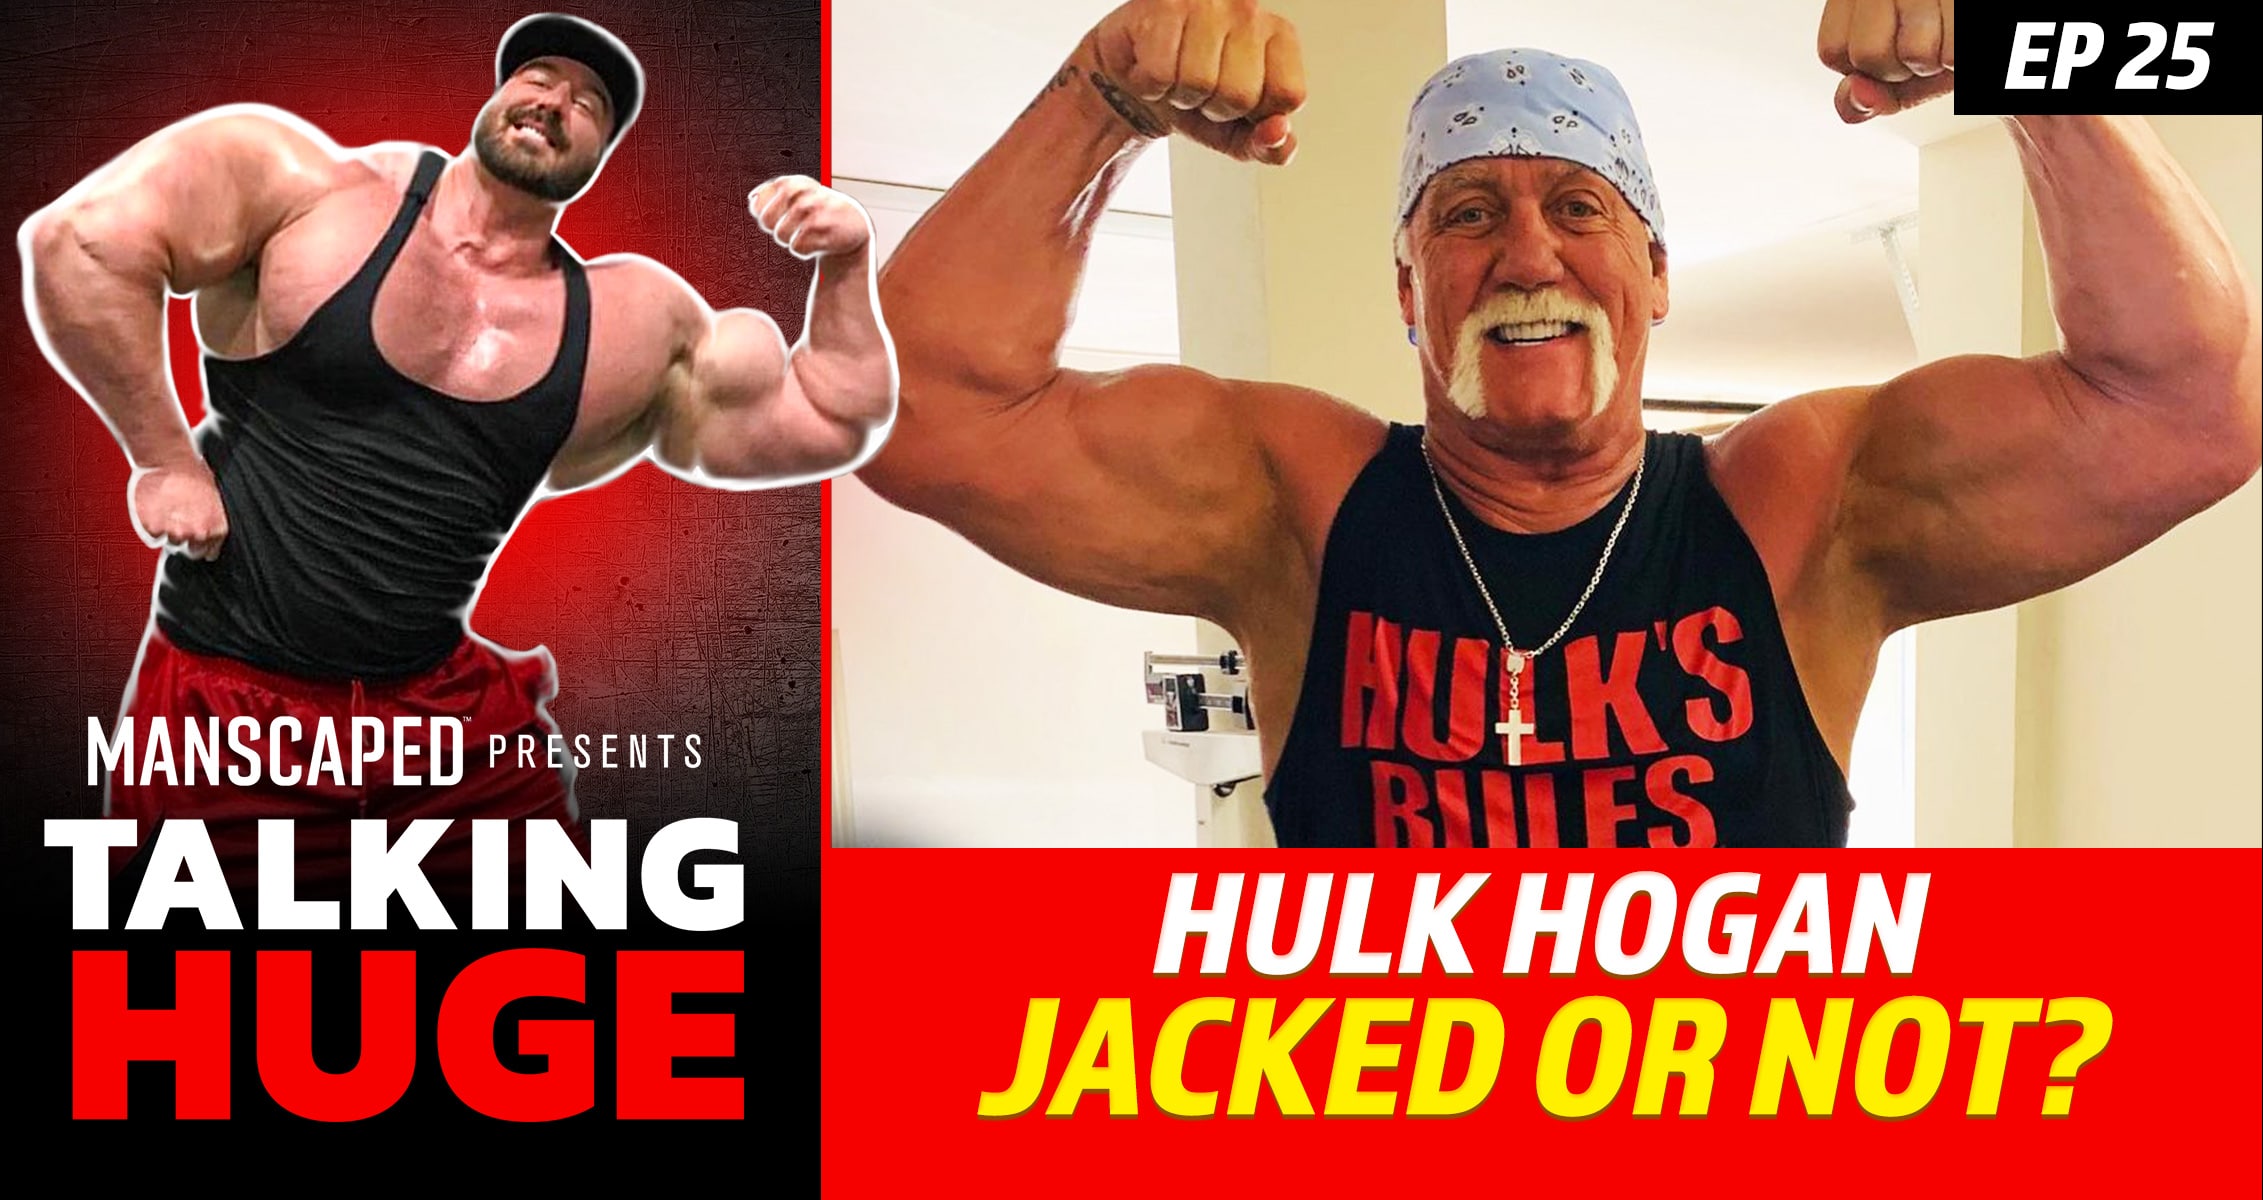 Talking Huge: Craig Golias Reacts To Hulk Hogan’s Physique At 68 Years Old